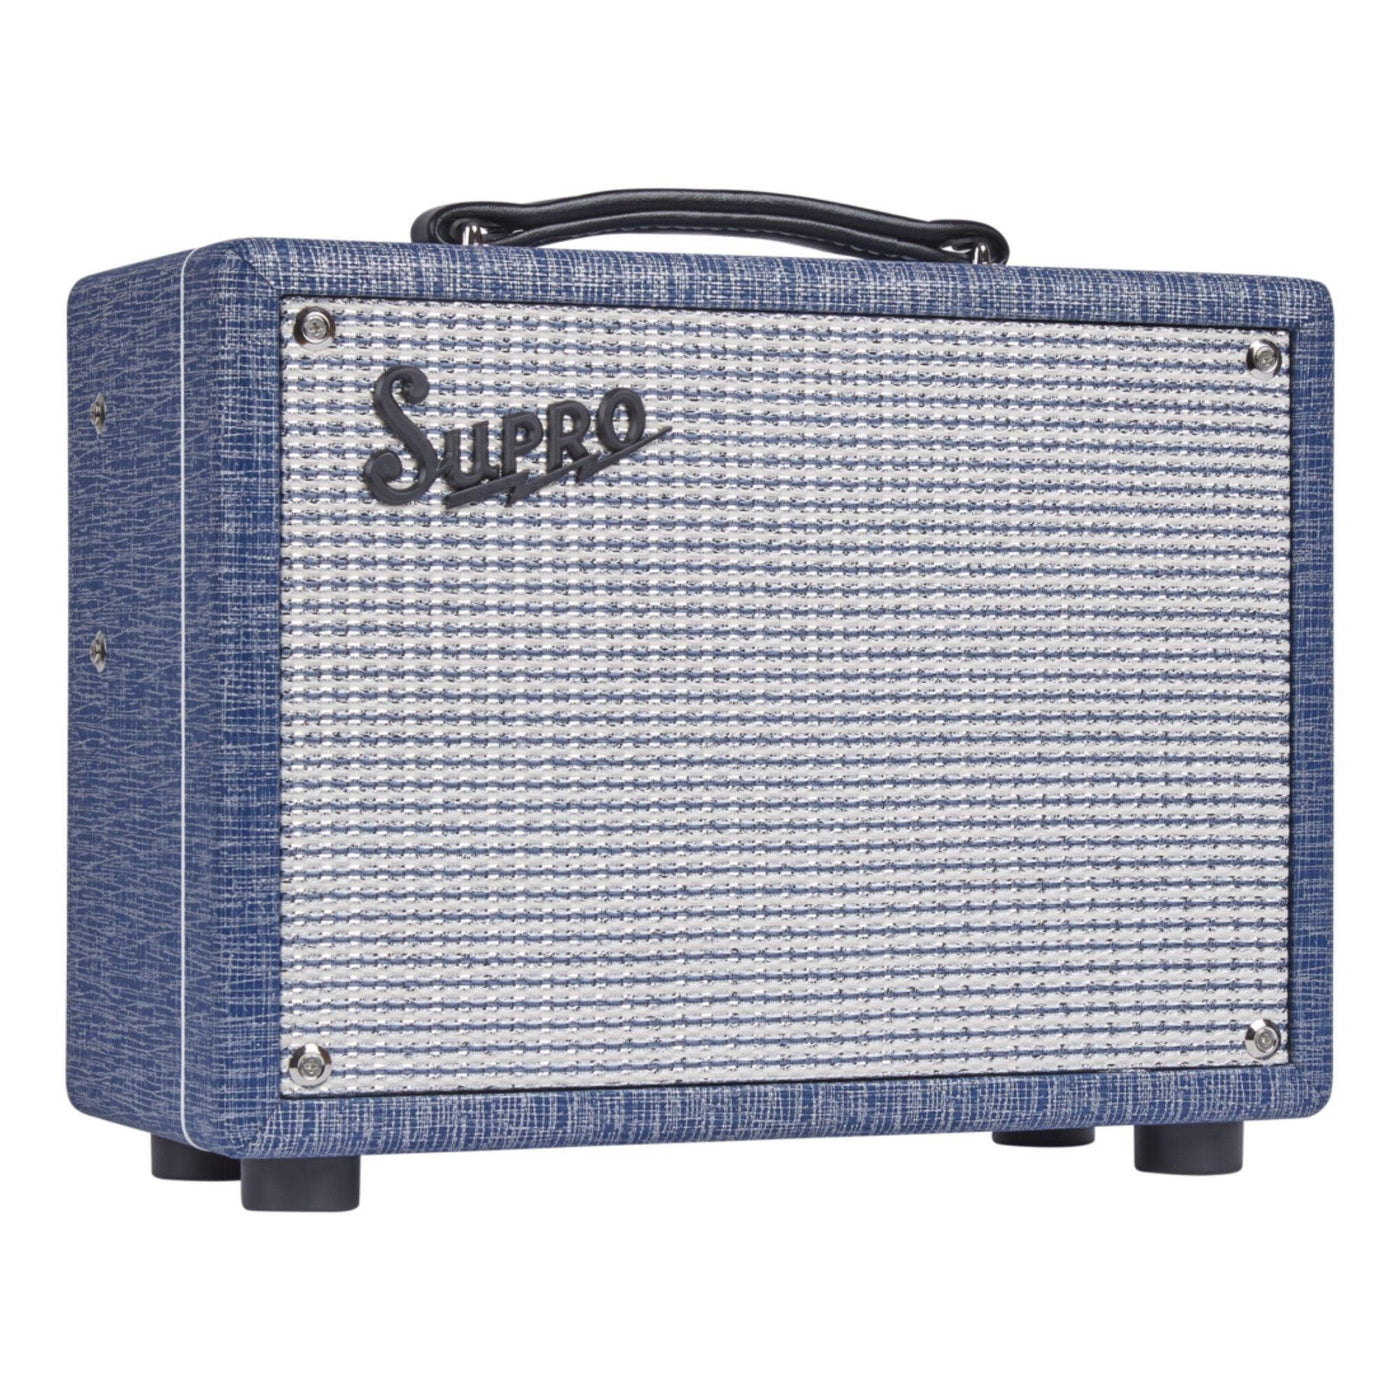 Supro 1605RJ ’64 Reverb Tube Guitar Combo Amplifier